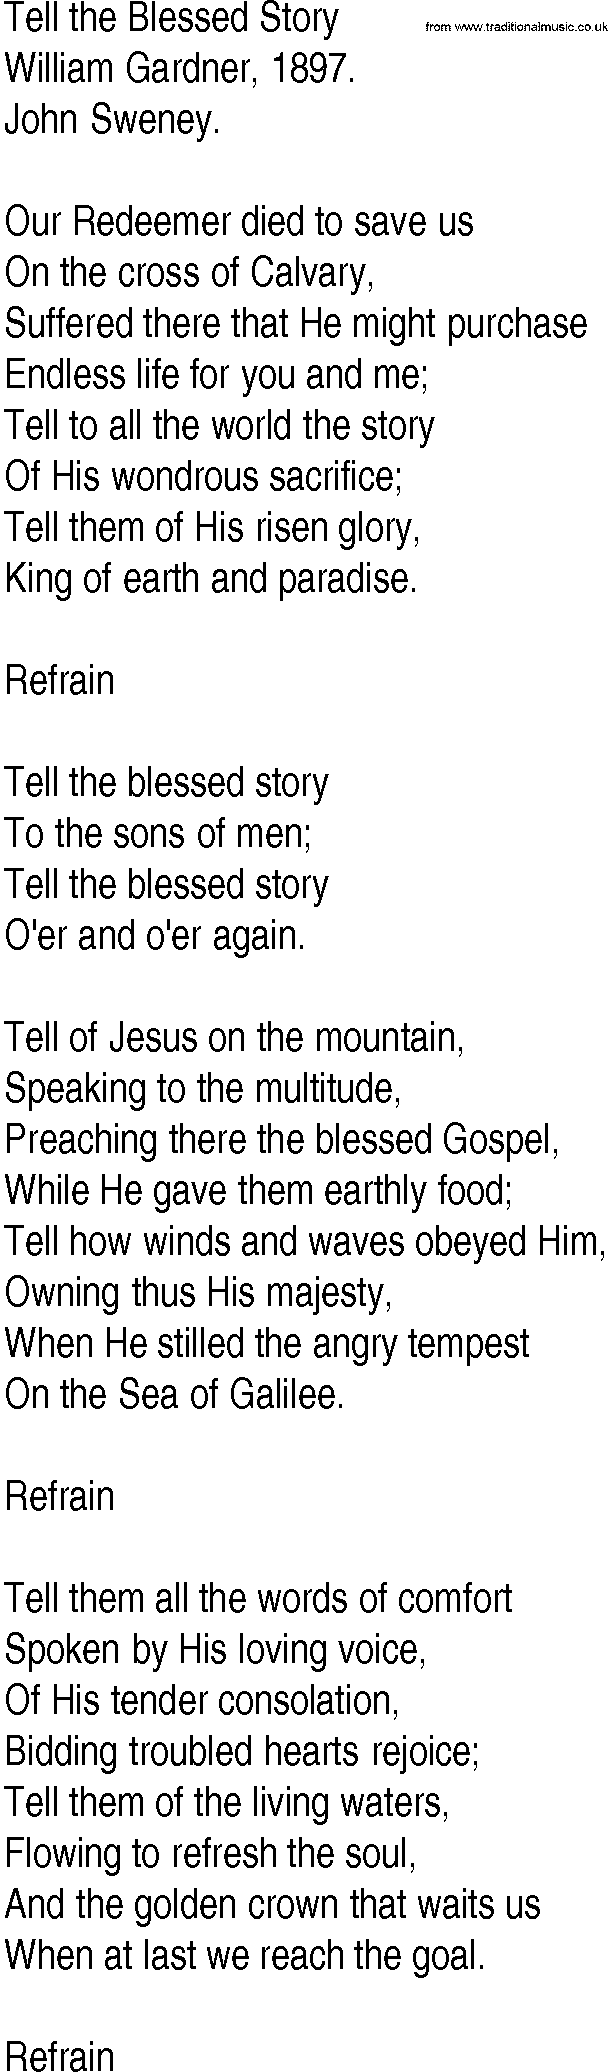 Hymn and Gospel Song: Tell the Blessed Story by William Gardner lyrics